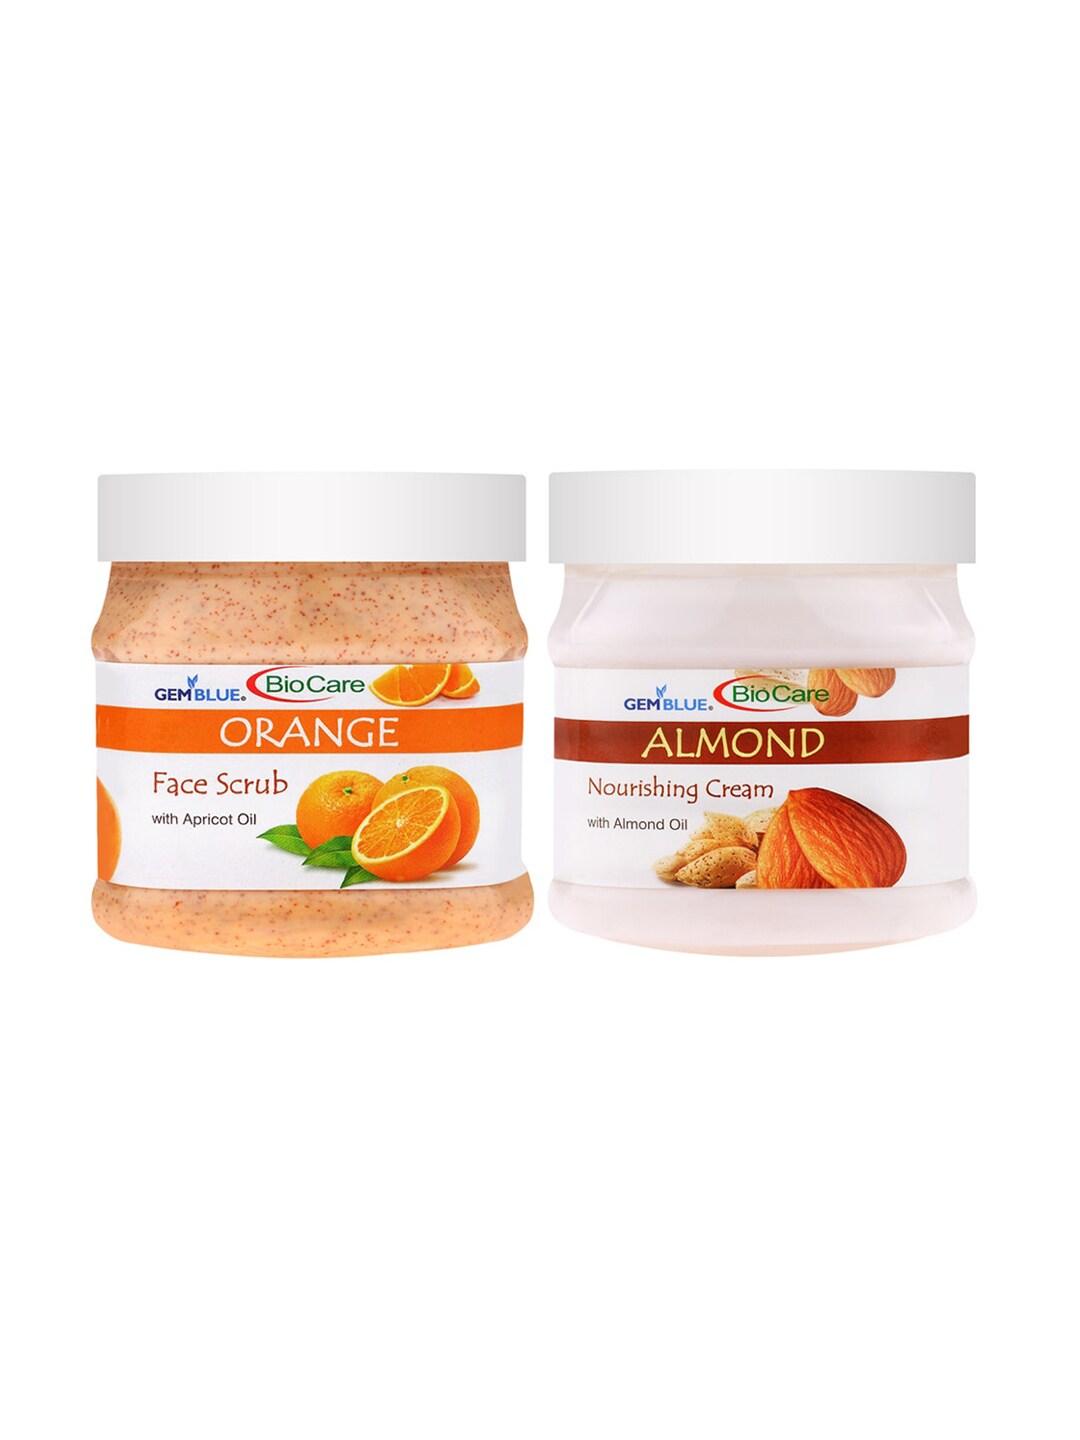 GEMBLUE BioCare Unisex Set Of 2 Orange Scrub & Almond Cream